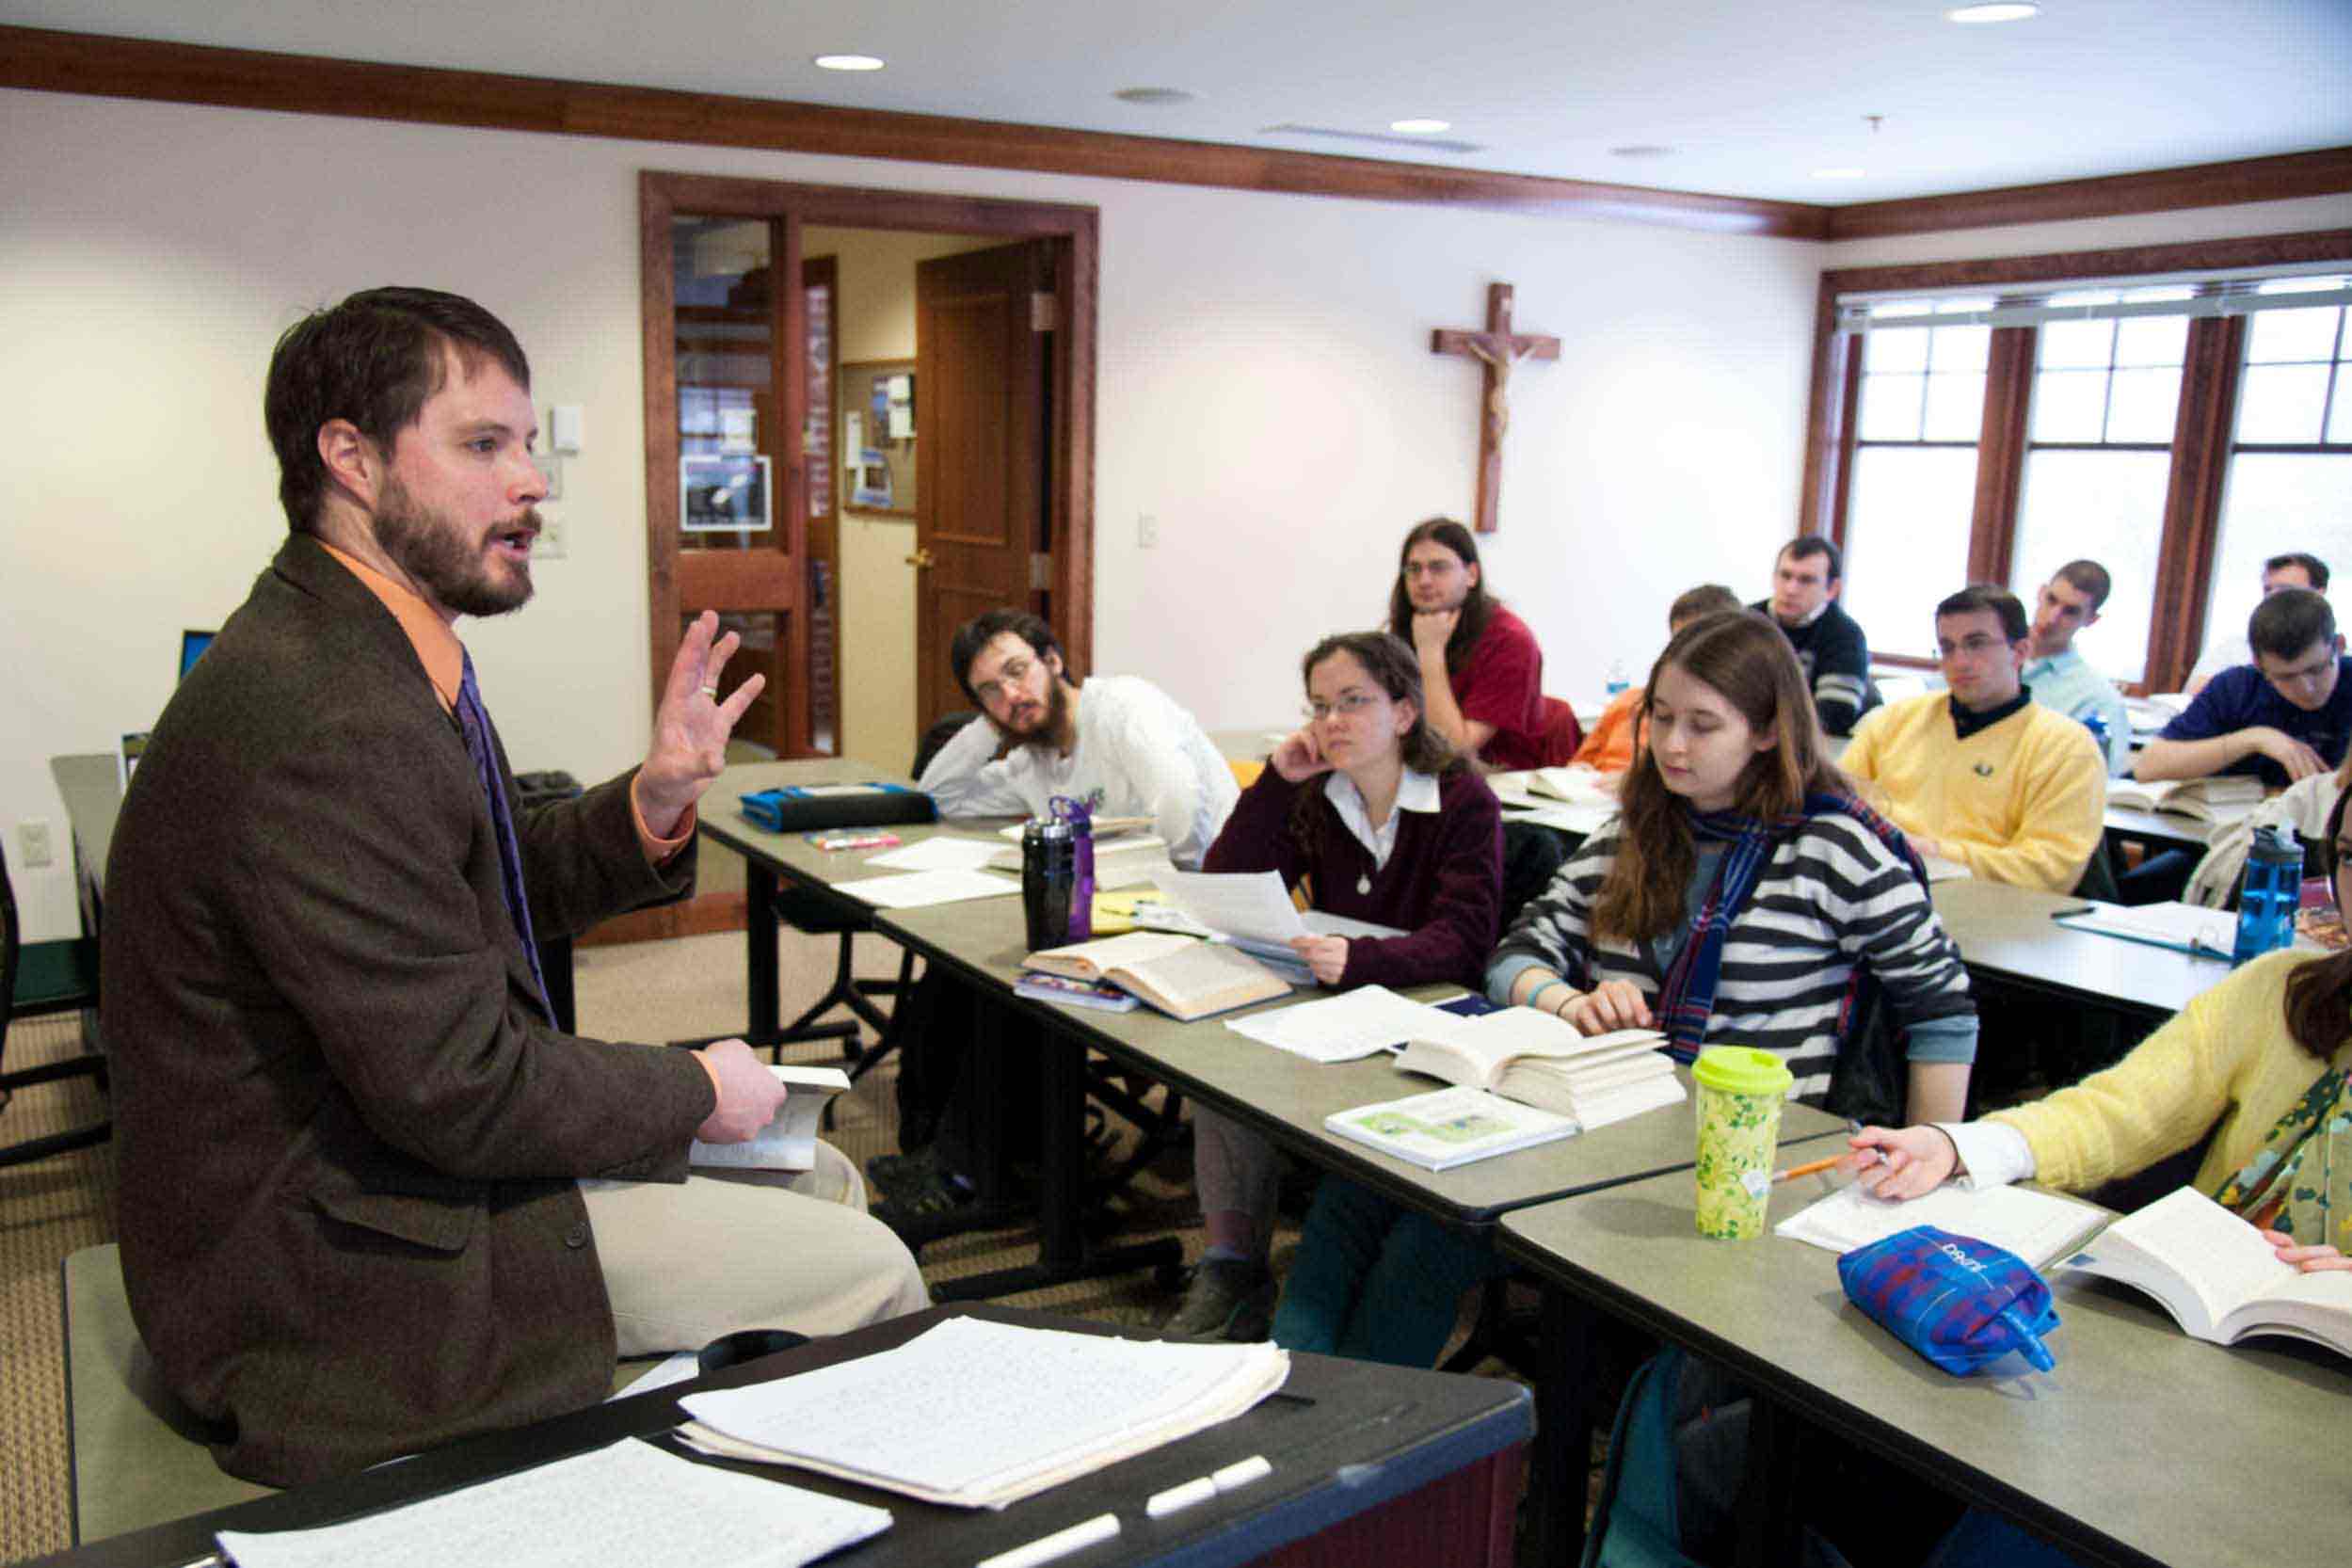 Associate professor of Philosophy, teaches a Catholic Vision course